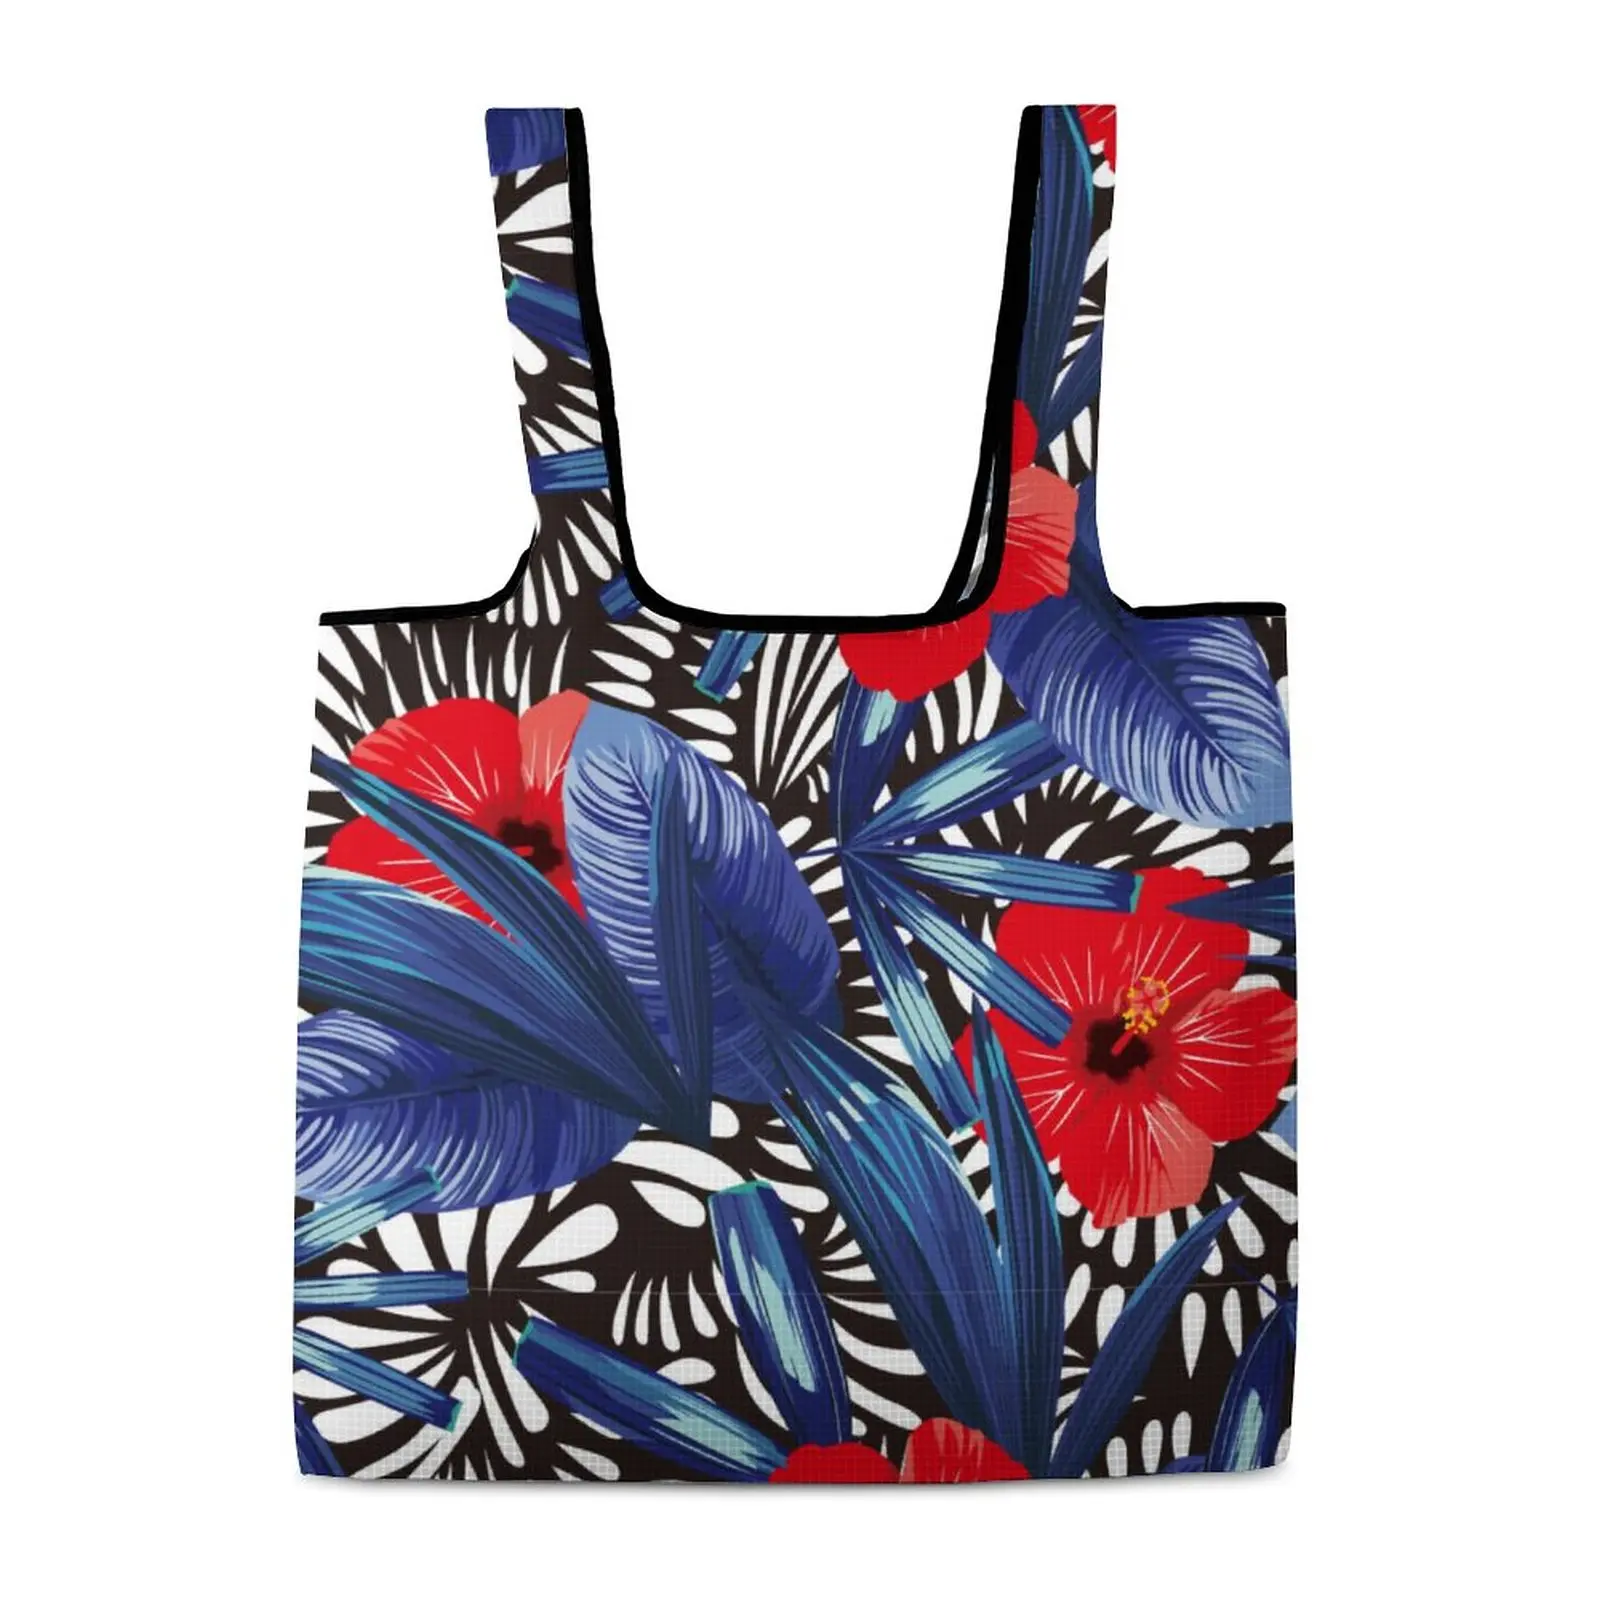 Red Flower Bag for Products Shopper Bag Aesthetic Bags Large Shopping Bag Travel Beach Shoulder Bag Custom Pattern